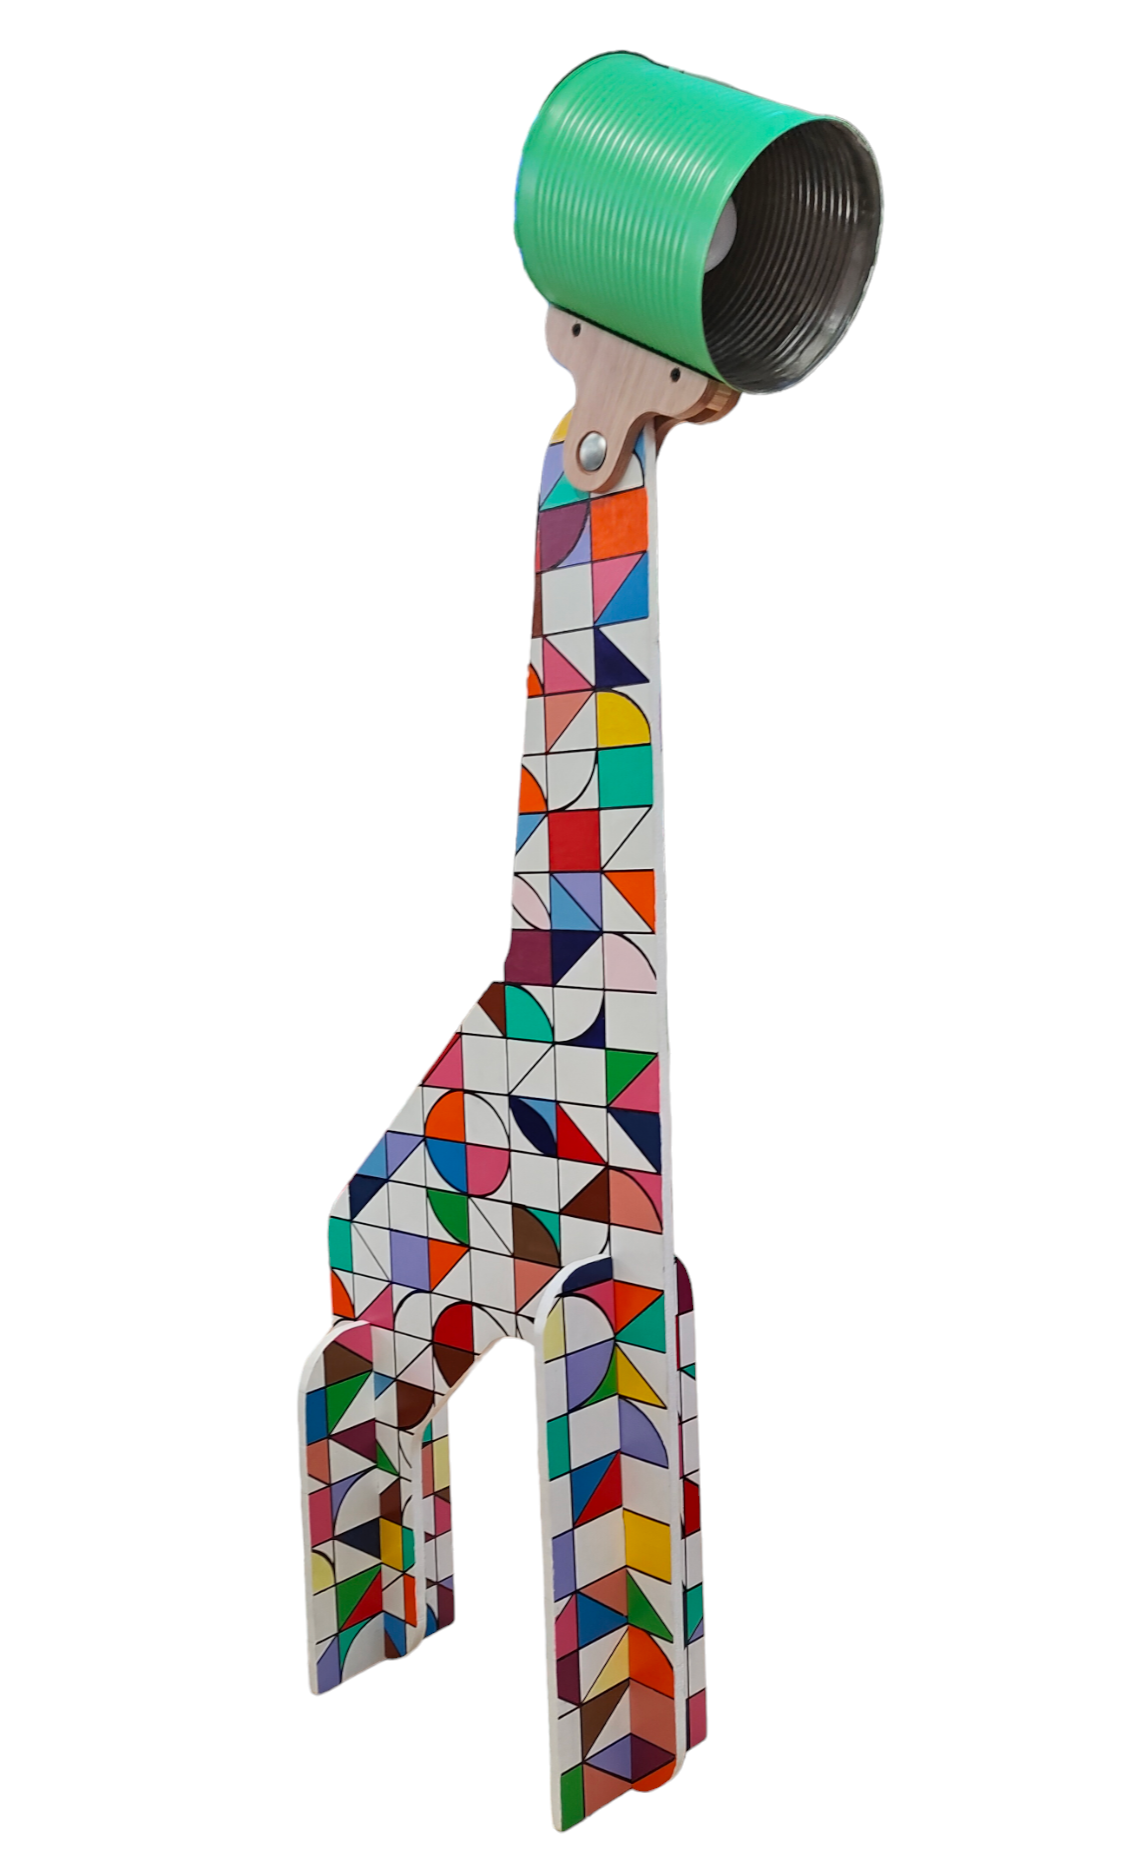 RE: Large Giraffe Lamp (Mosaic)